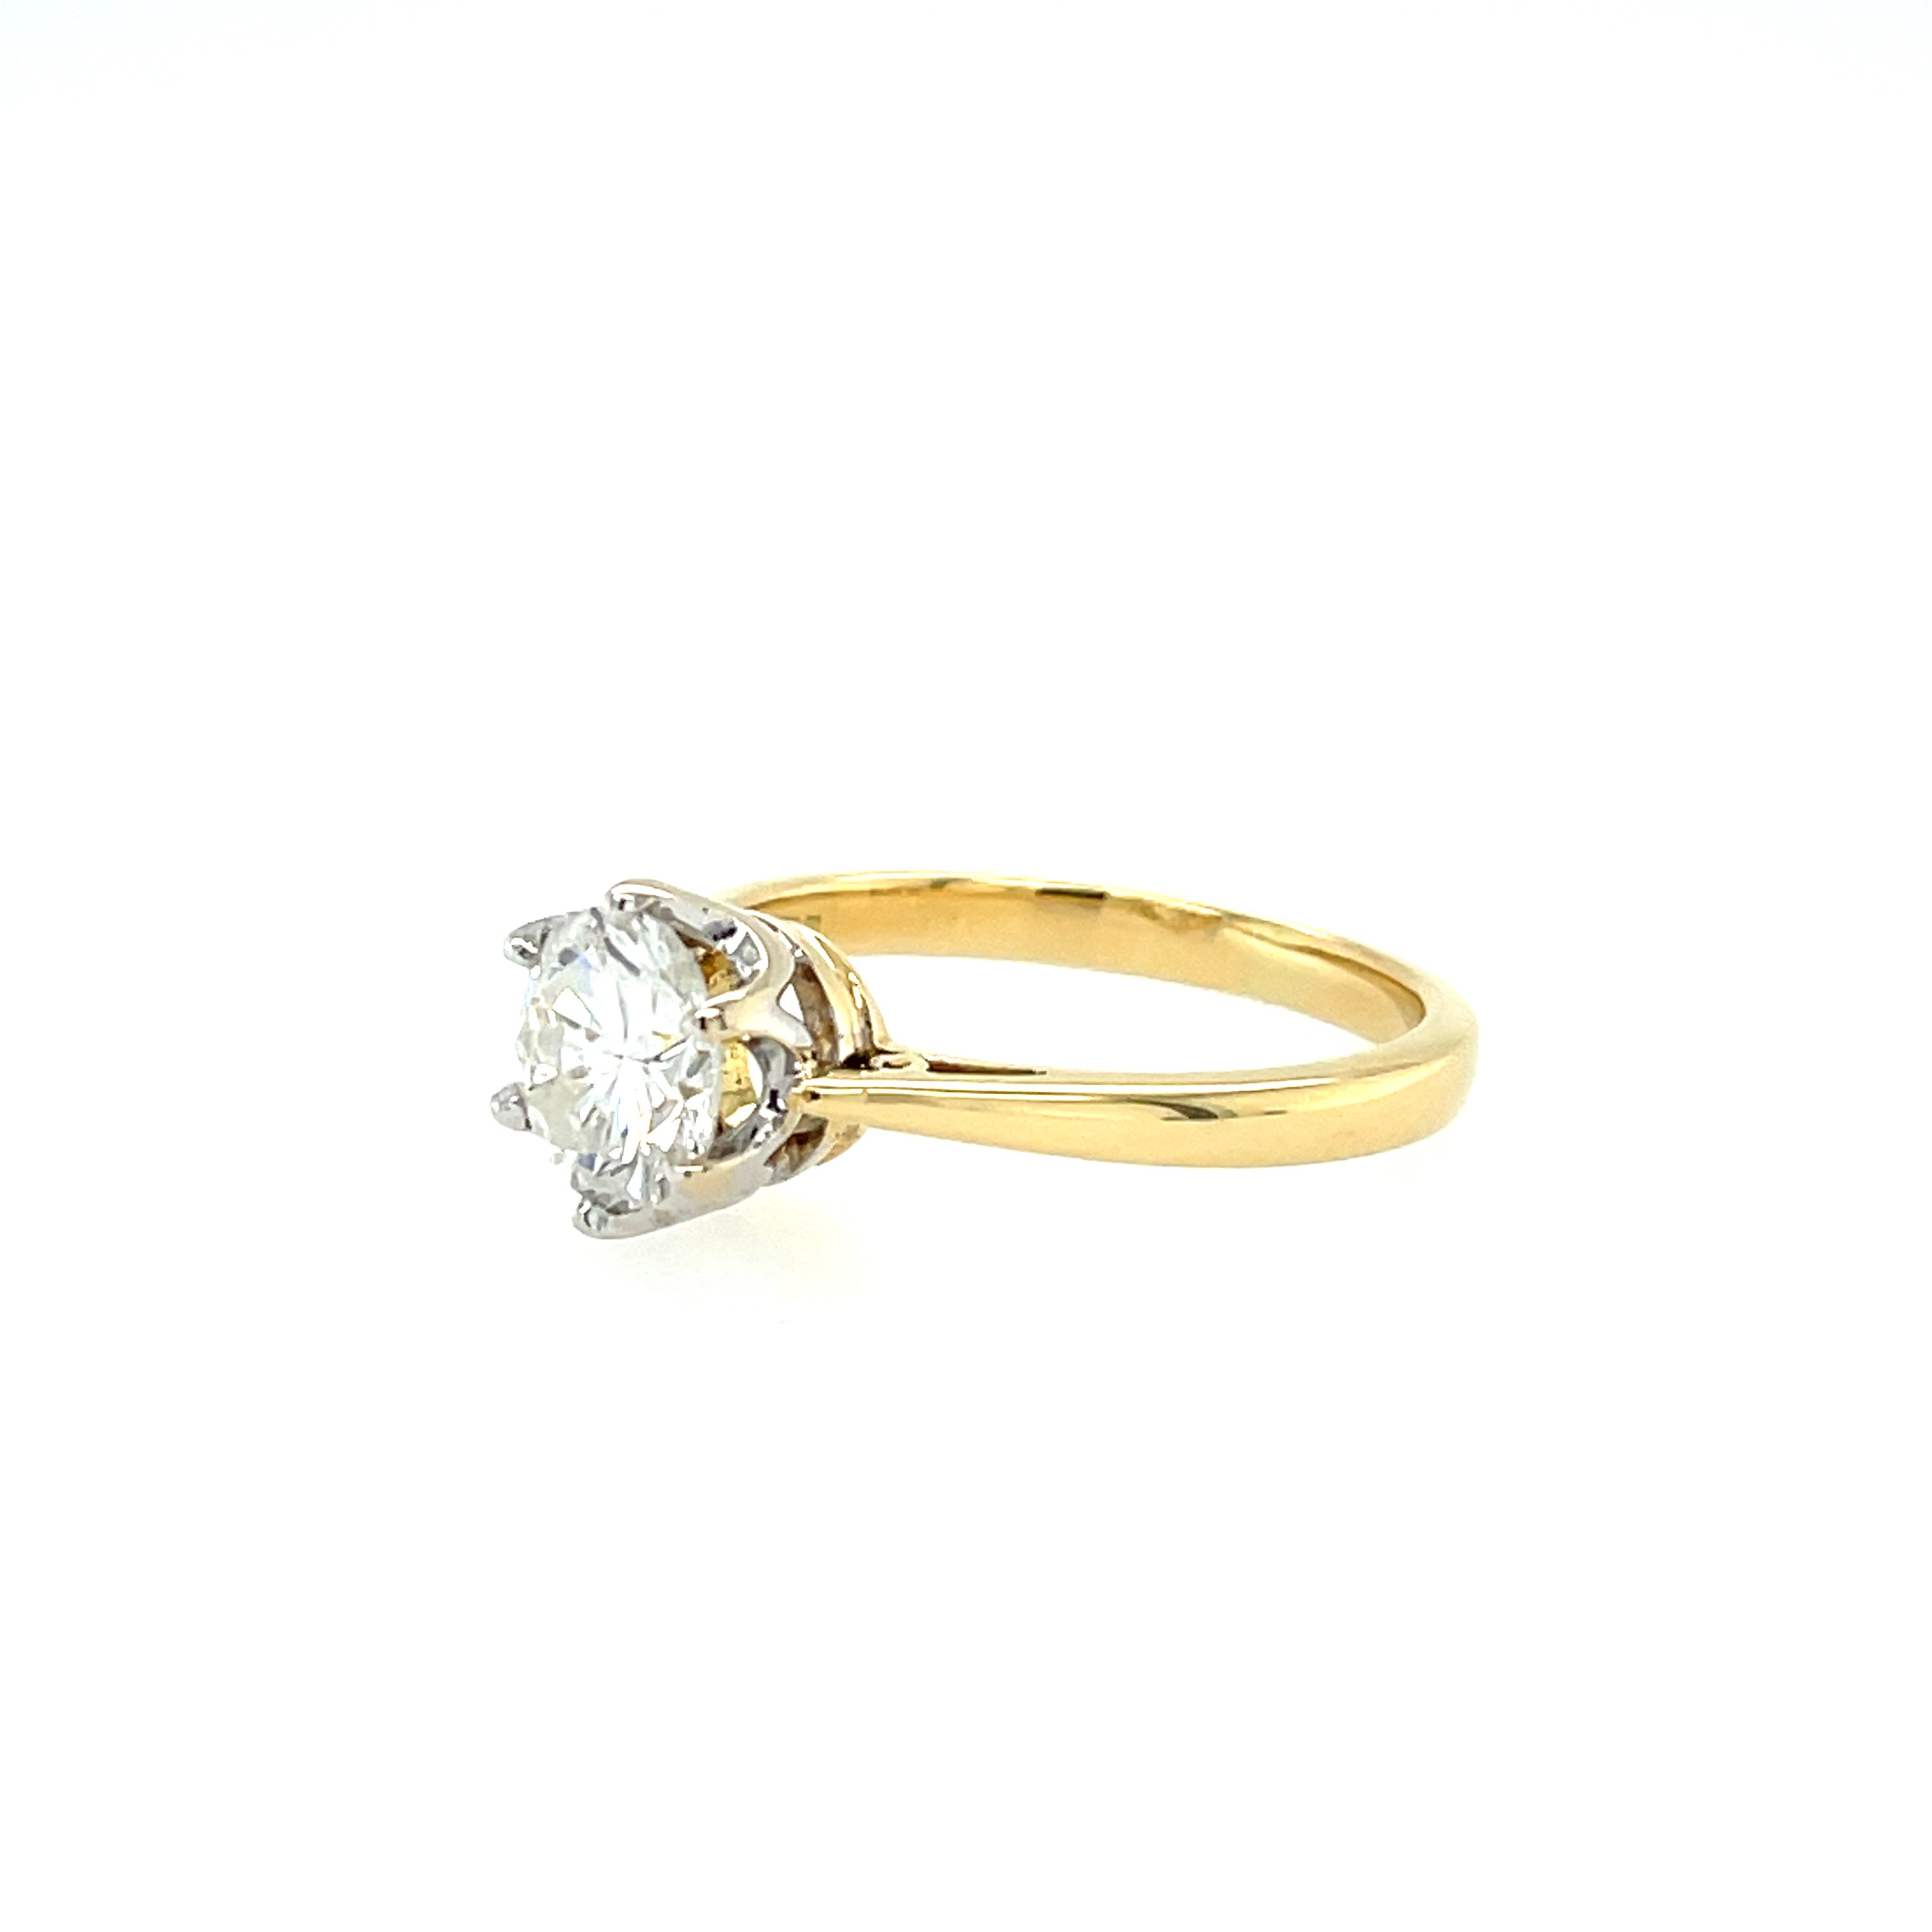 18ct Yellow Gold 1.38ct Round Brilliant Cut Diamond Solitaire Ring